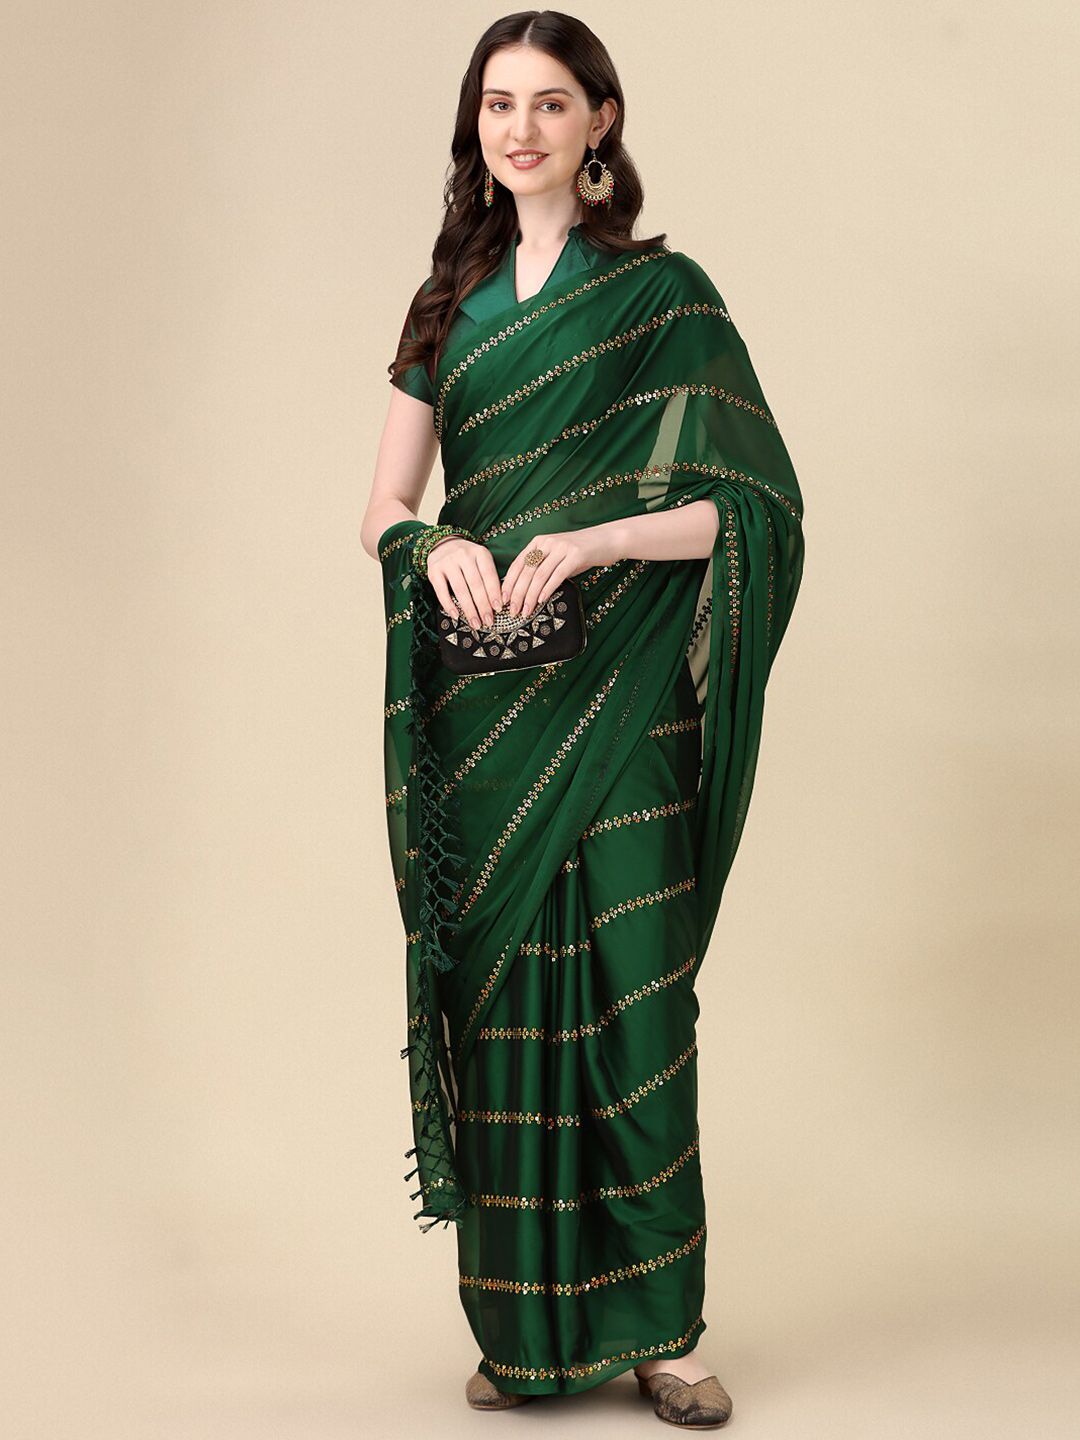 KALINI Sequin Embellished Saree Price in India